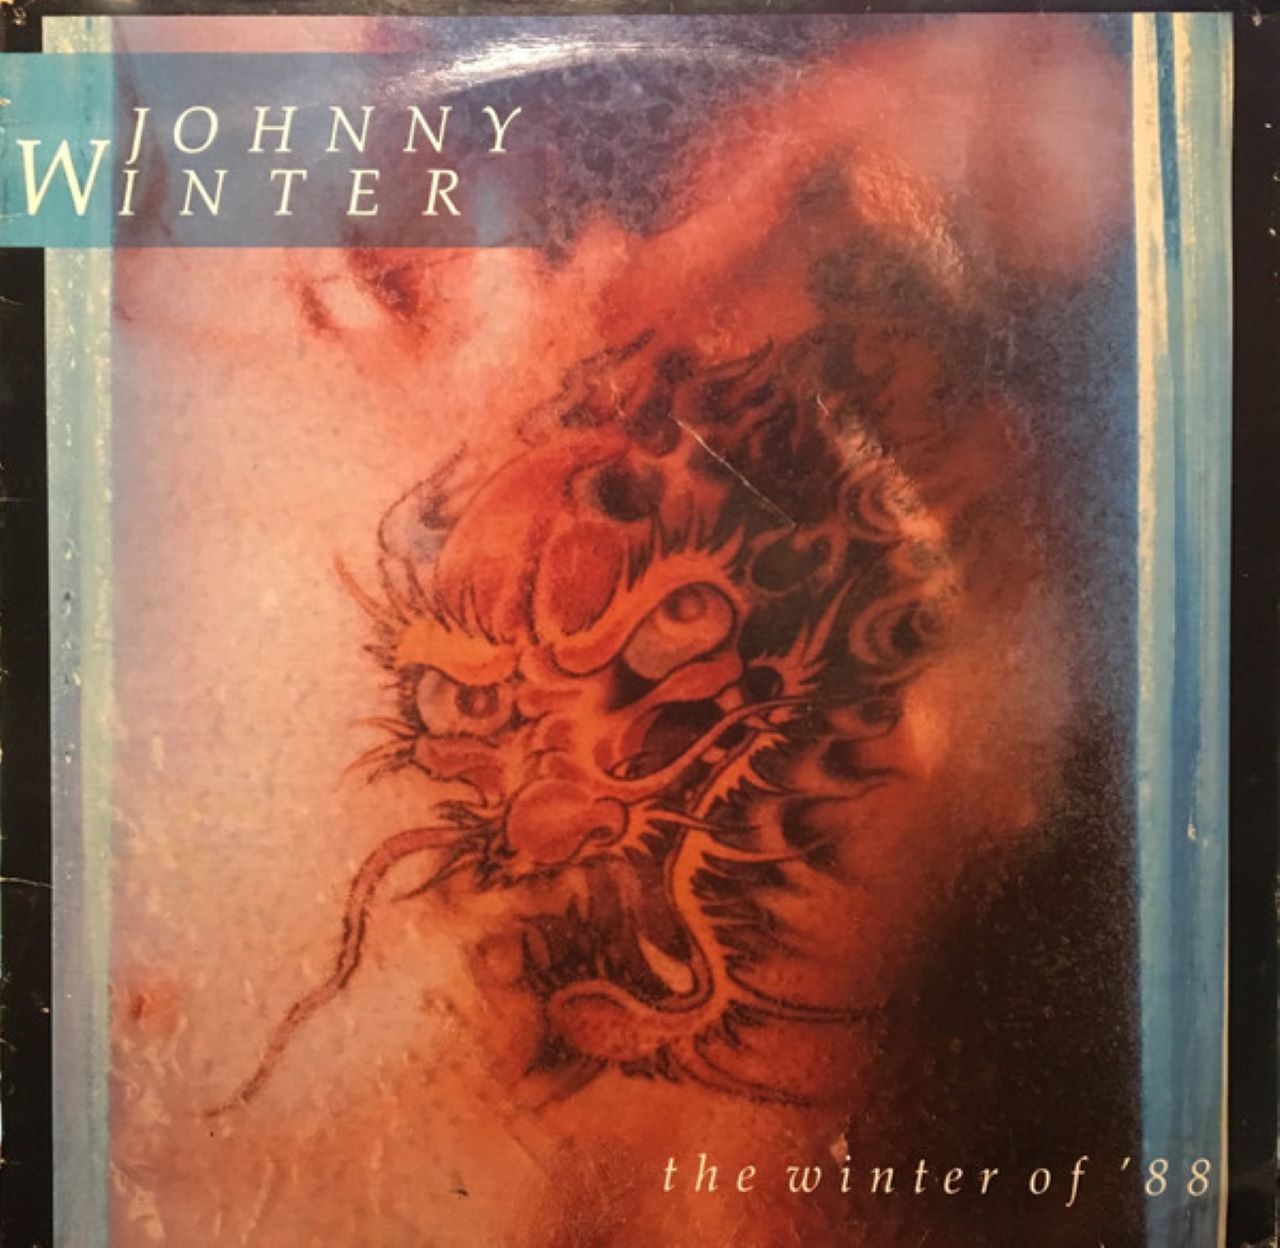 Johnny Winter - The Winter Of ‘88 cover album